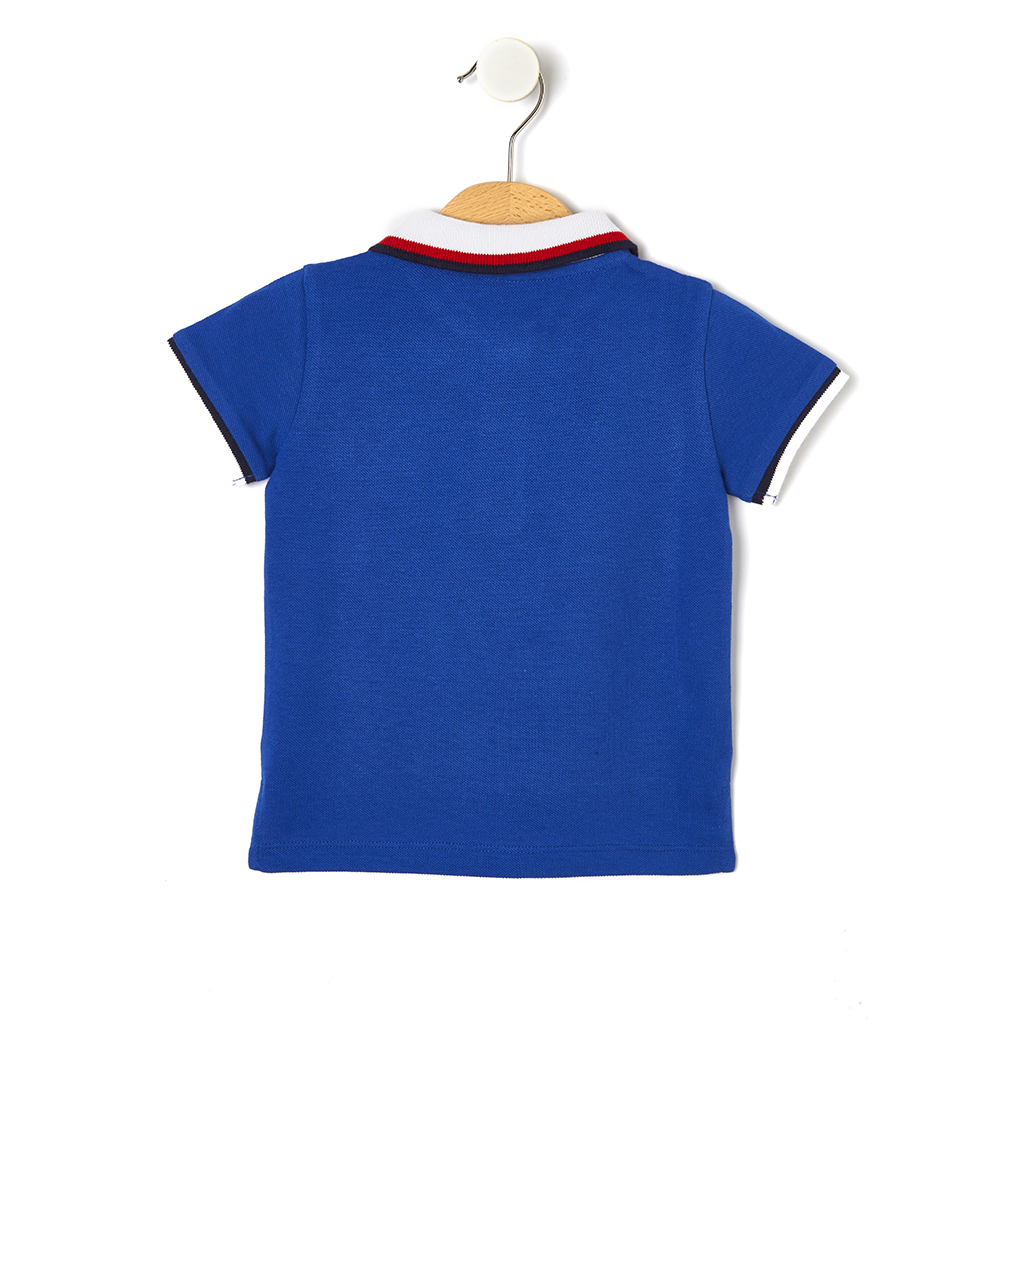 T-shirt πόλο πικέ μπλε για αγόρι - Prénatal